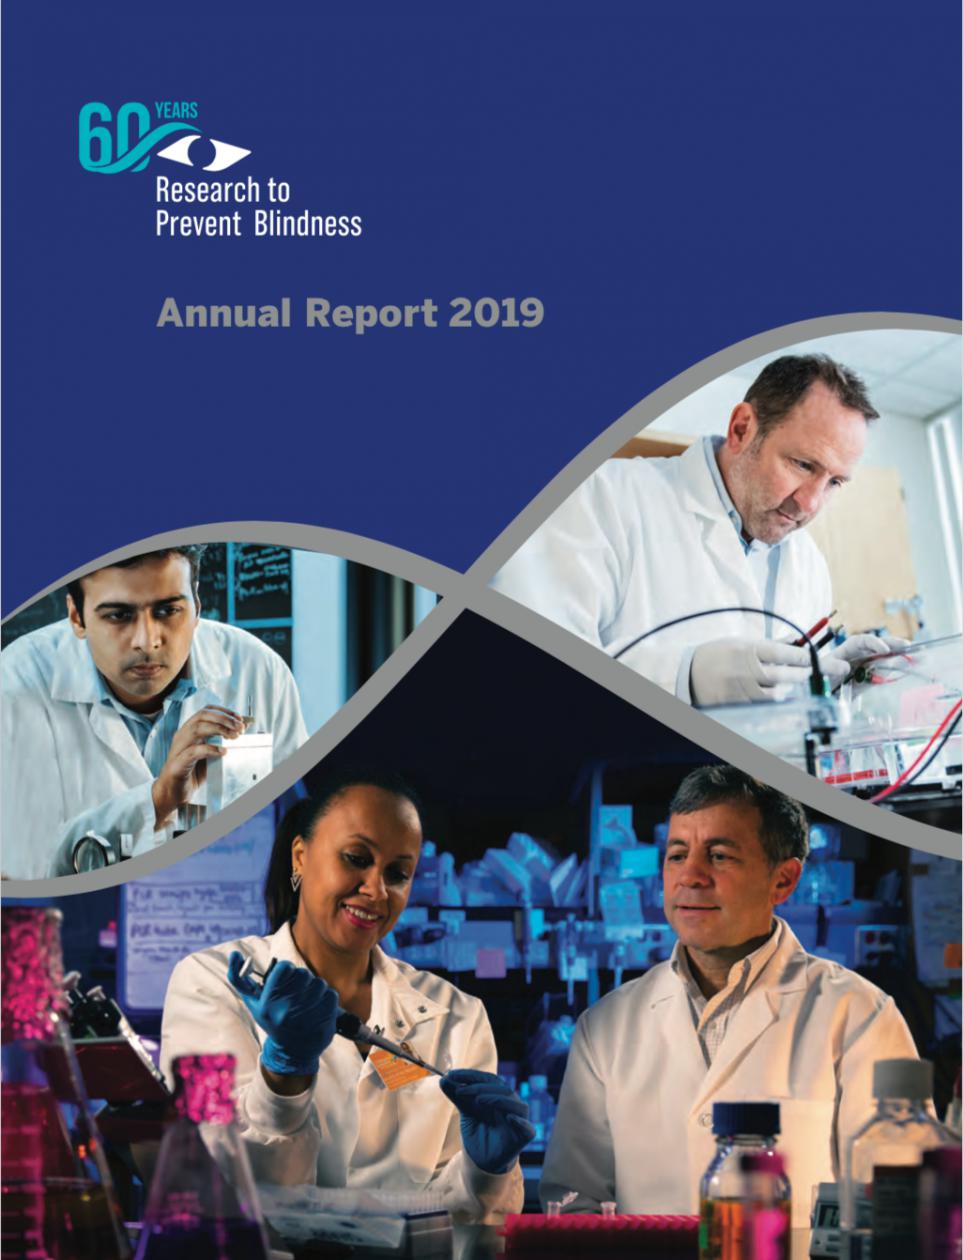 RPB Annual Reports